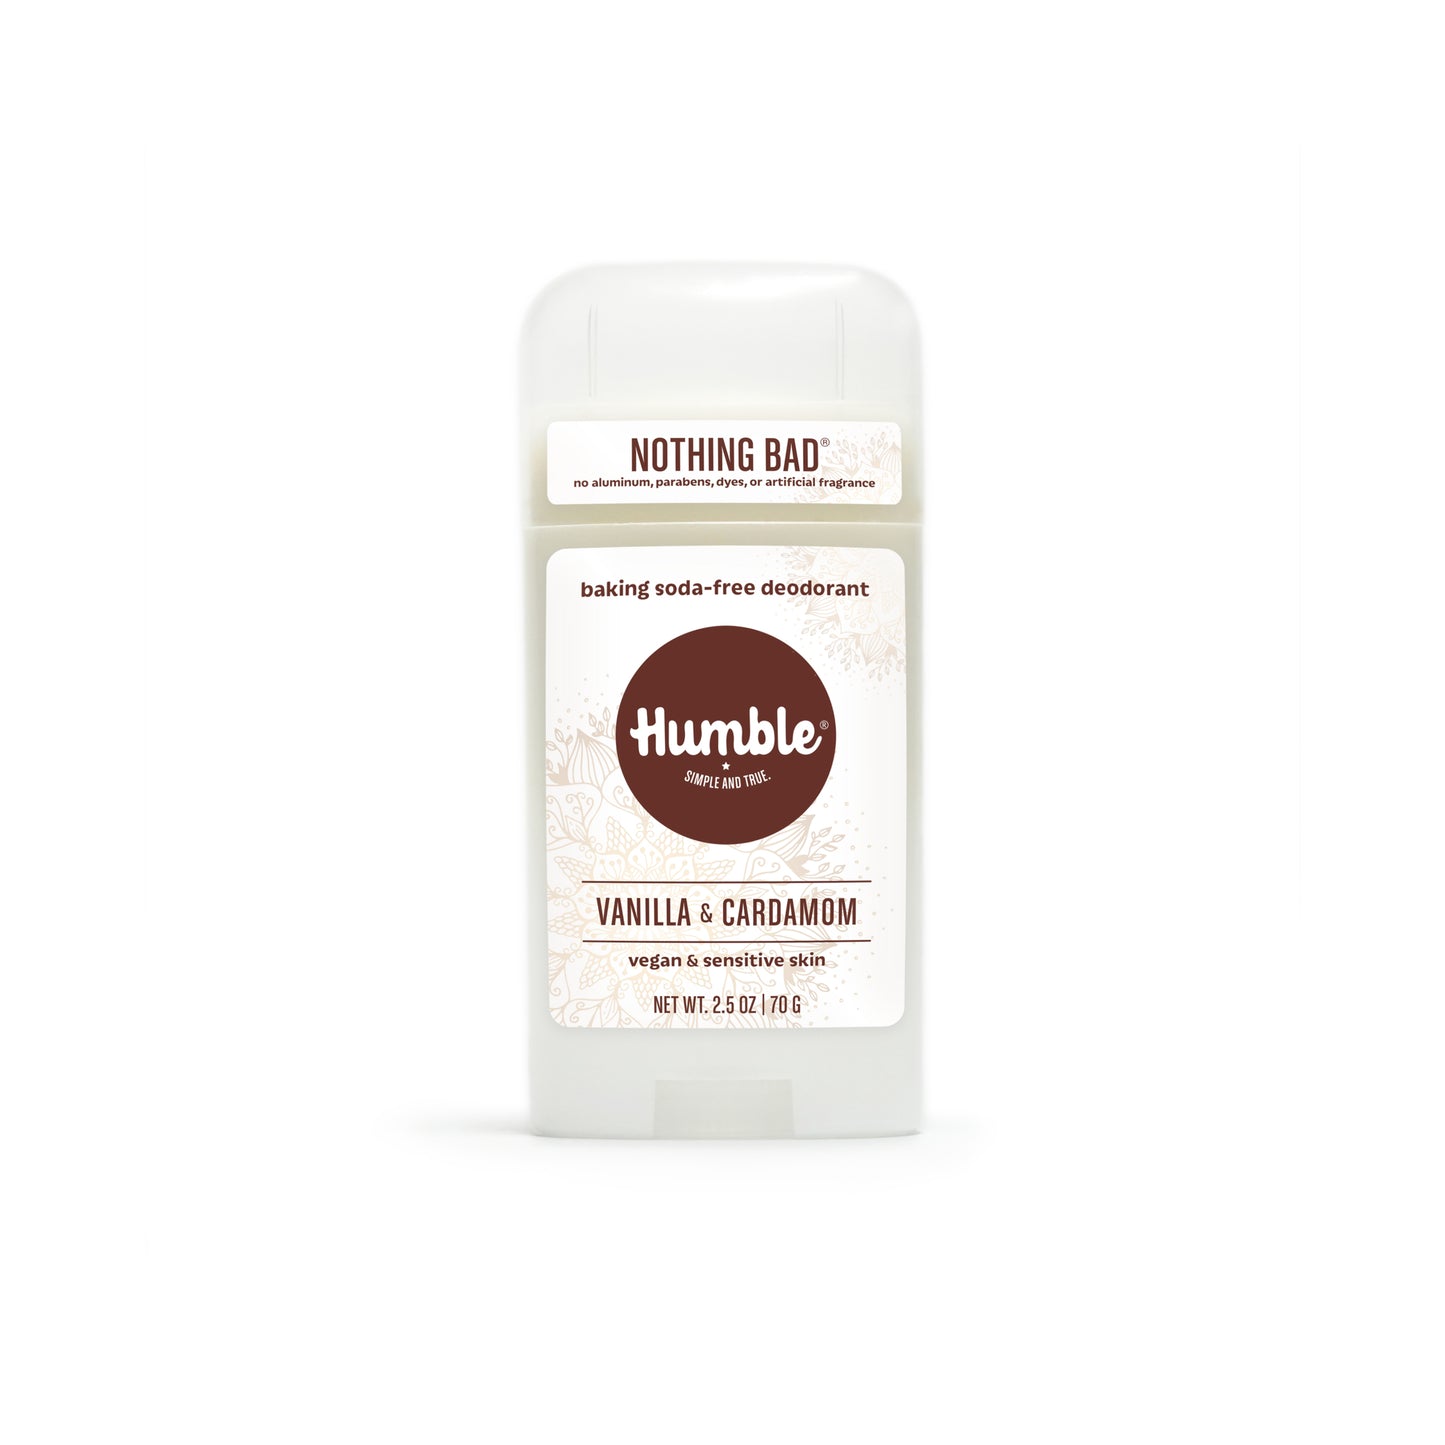 HUMBLE DEODORANT Vanilla & Cardamom Vegan & Sensitive Deodorant